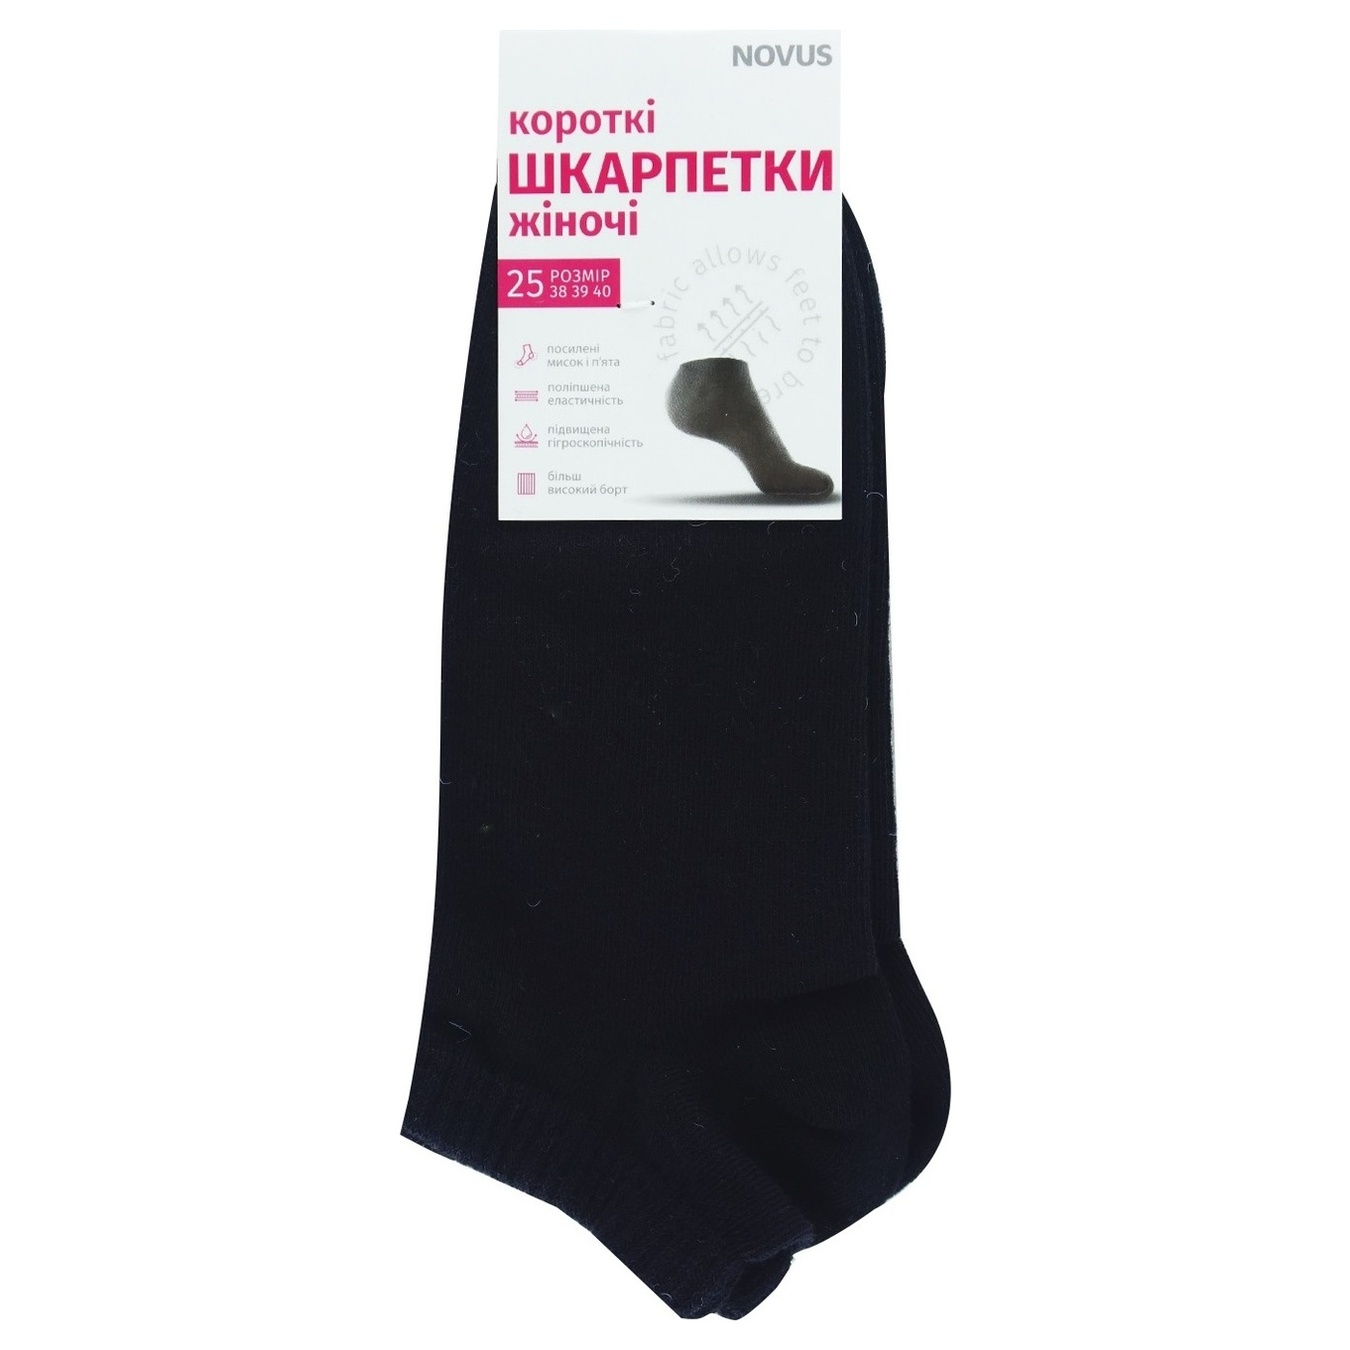 Women's socks NOVUS demi-season short black size 25